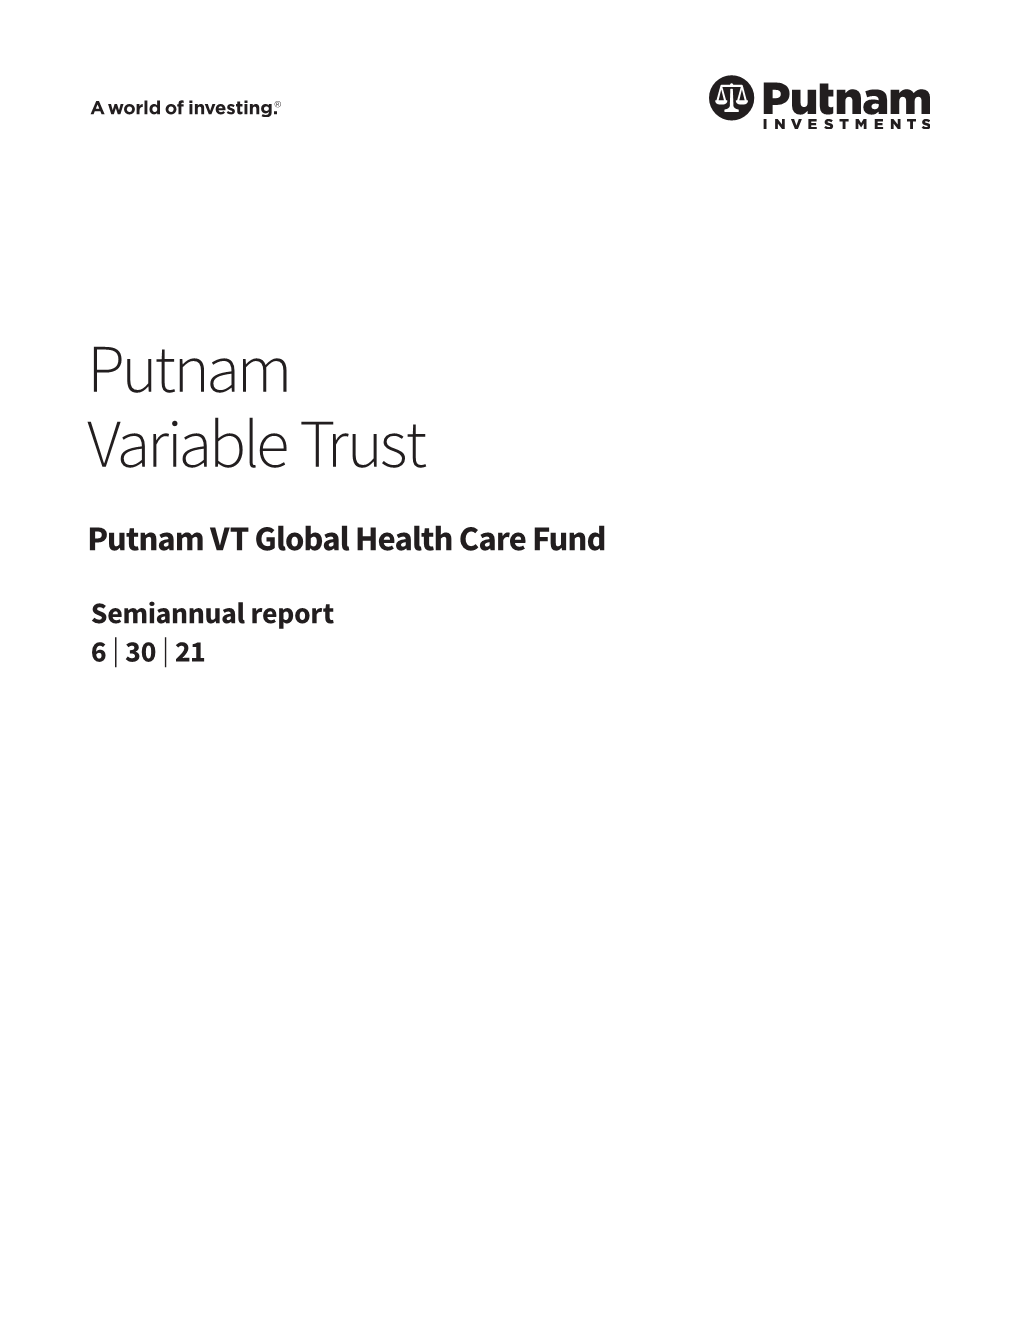 Putnam VT Global Health Care Fund Semiannual Report